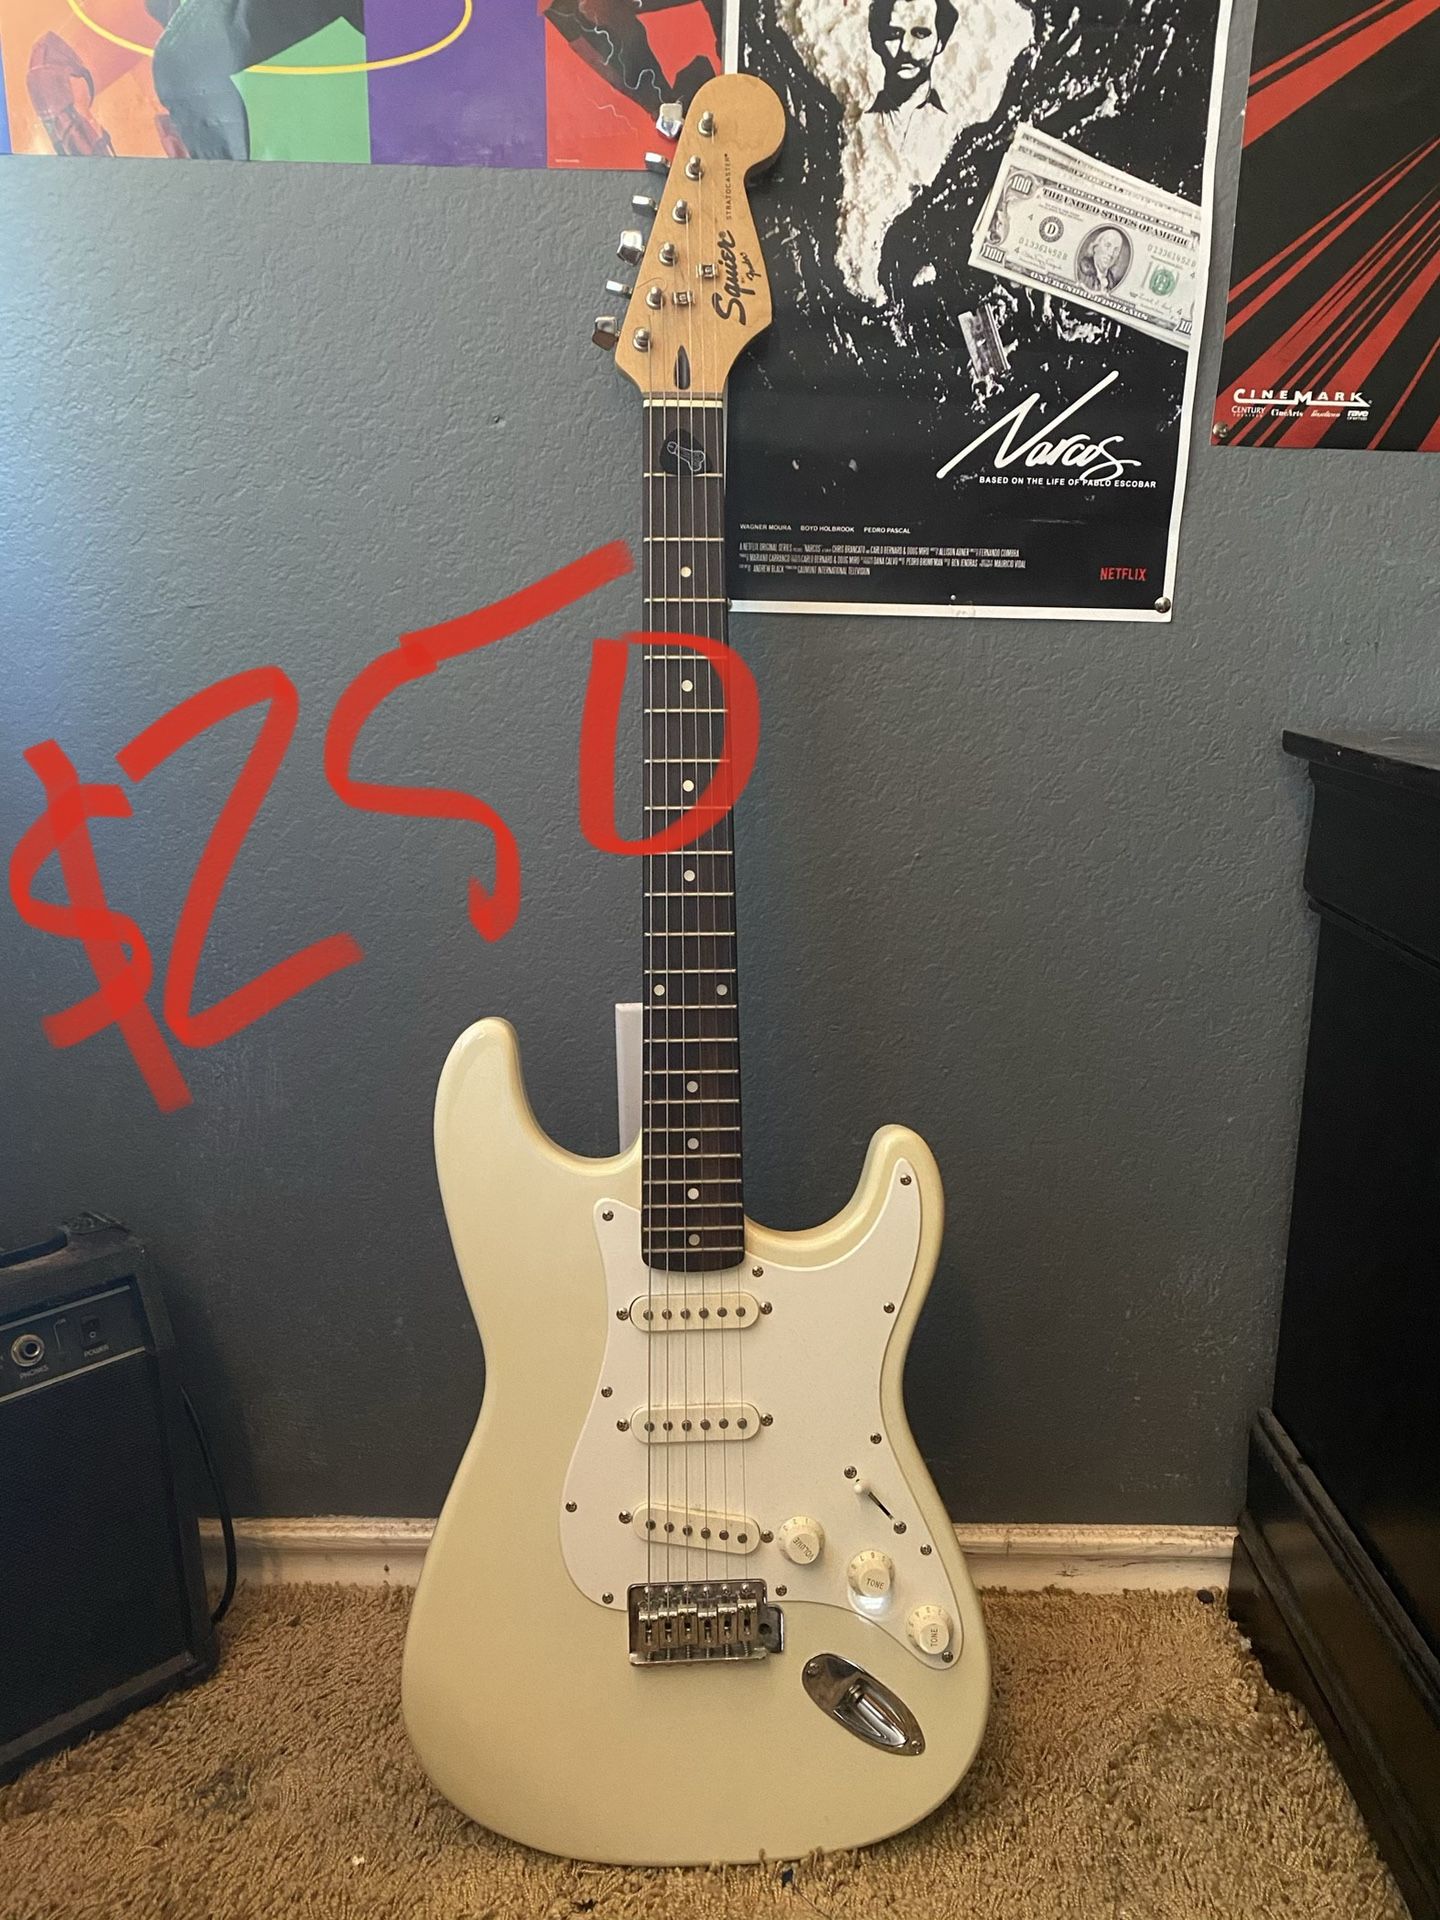 White Fender Guitar (Squier)